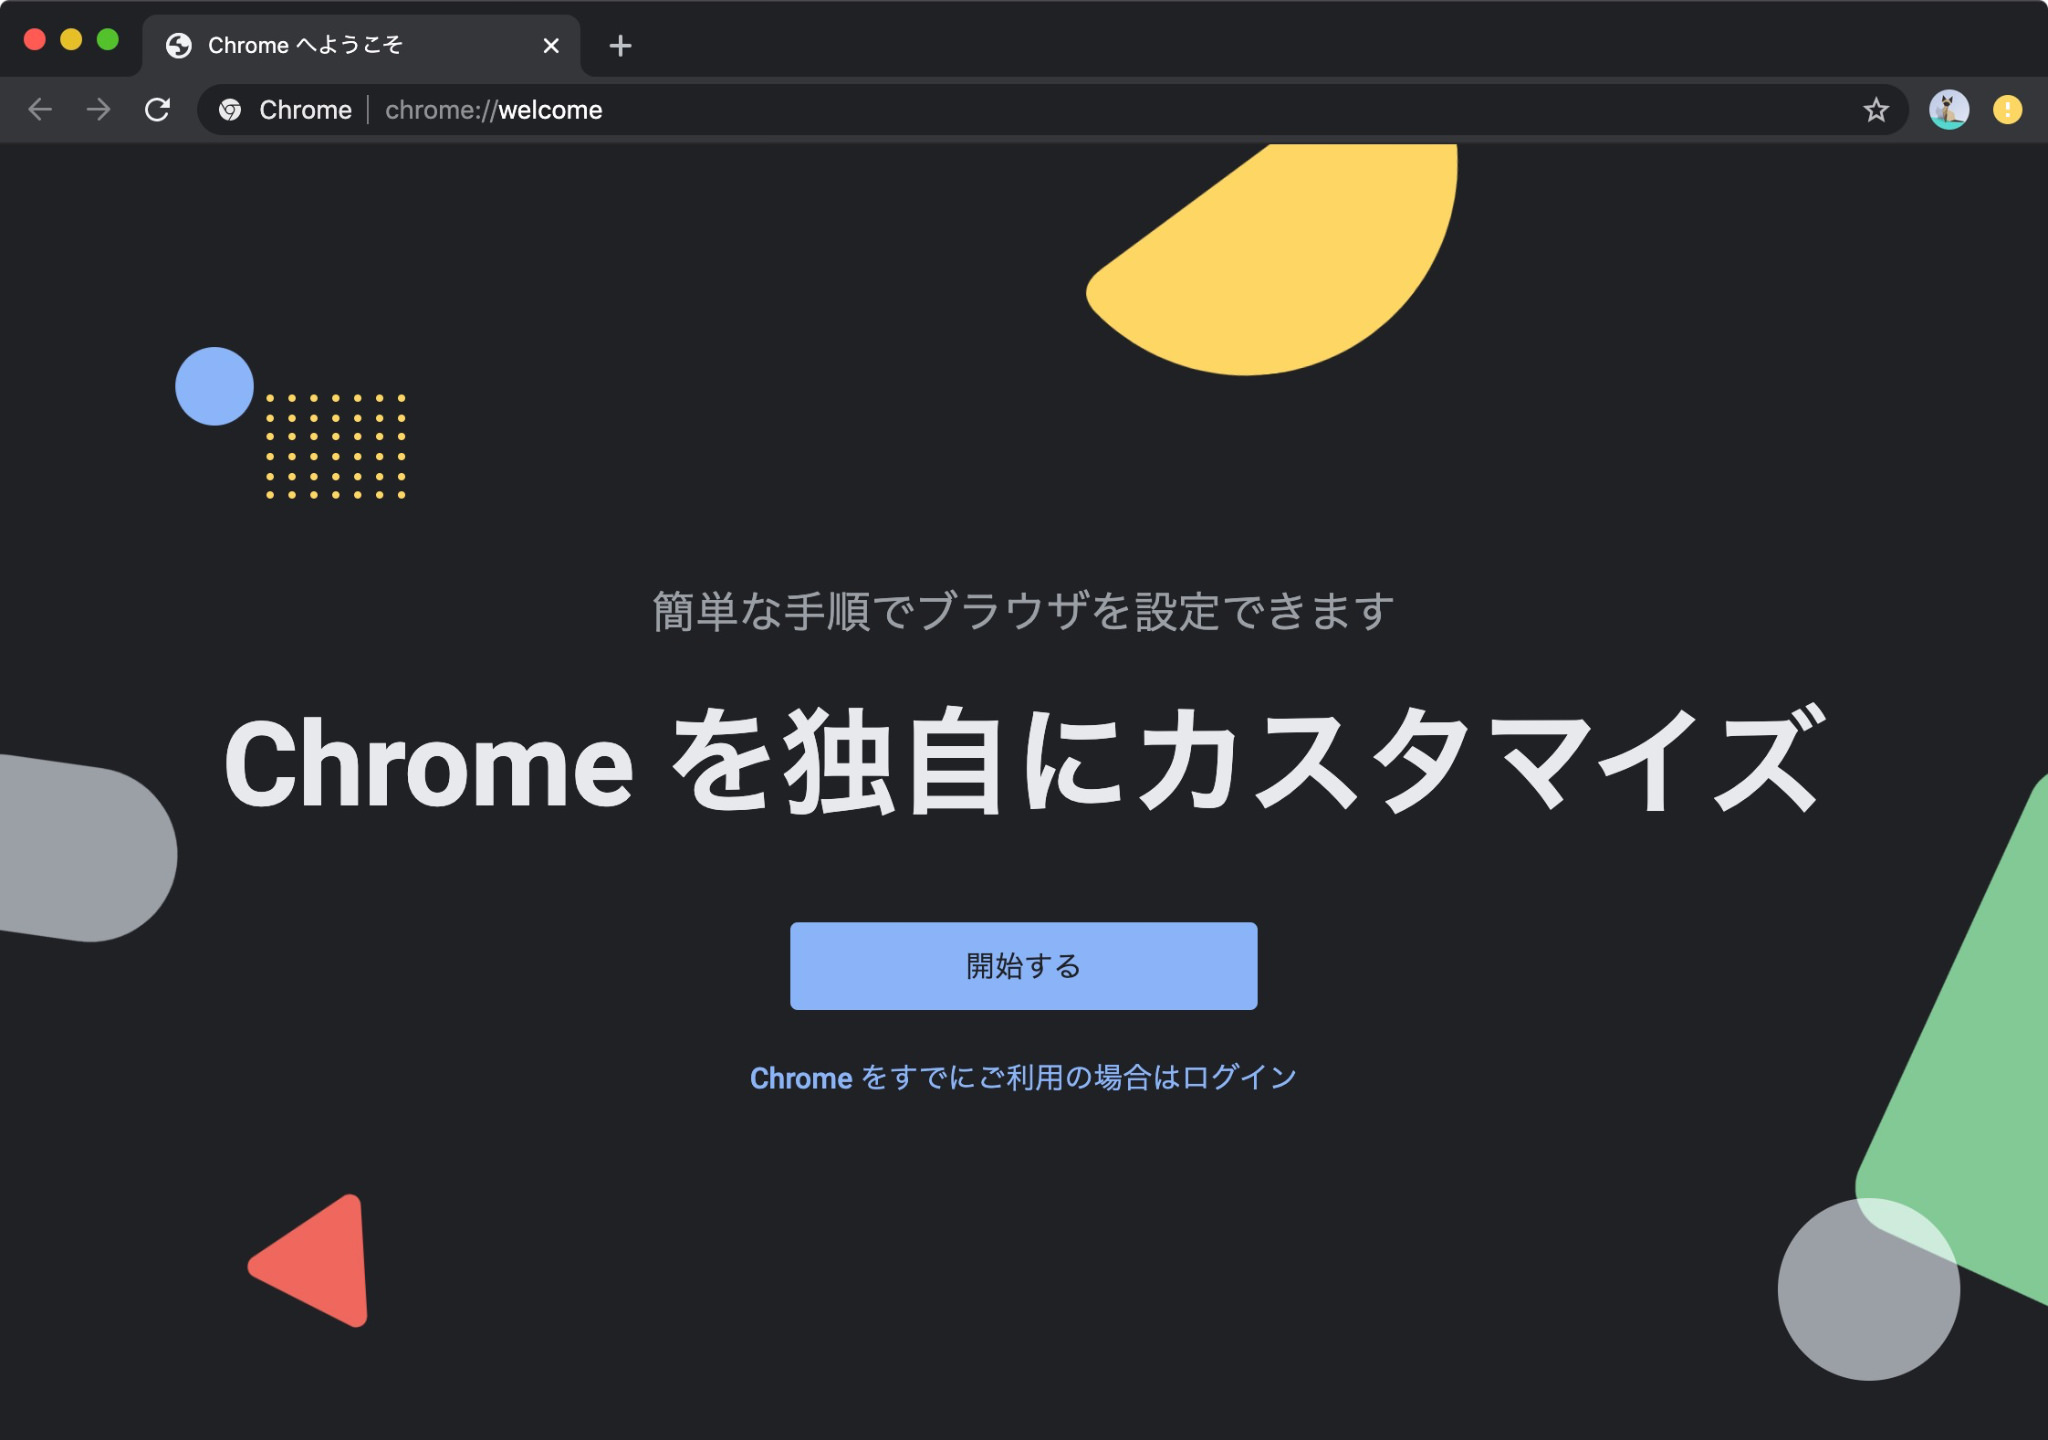 chrome-account-change_2